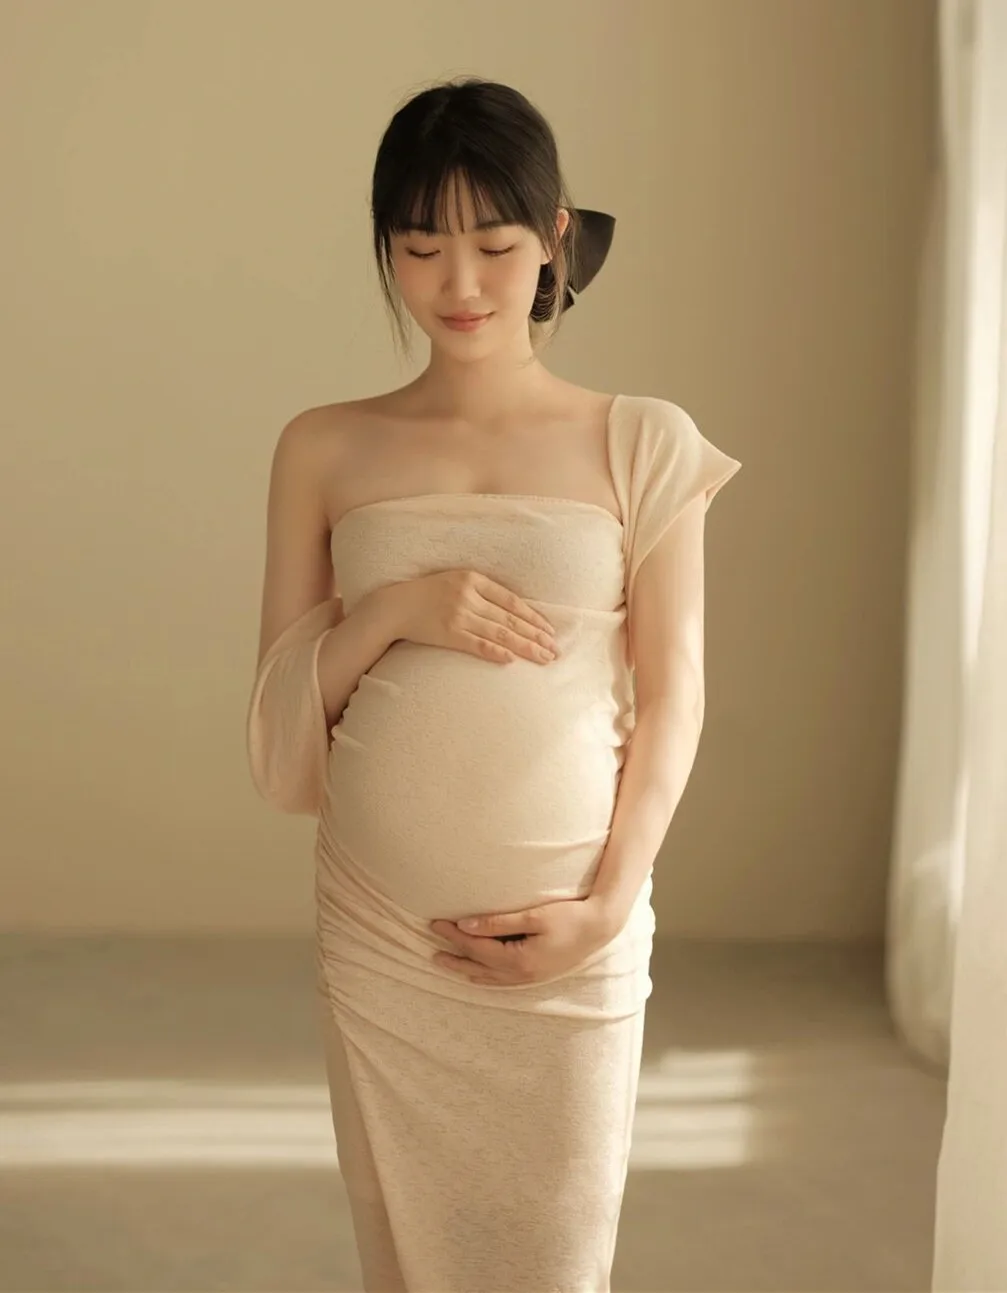 Dvotinst Women Photography Props Maternity Off-shoulder Elegant Pregant Dress Pregnancy Dresses Studio Photoshoot Photo Clothes enlarge